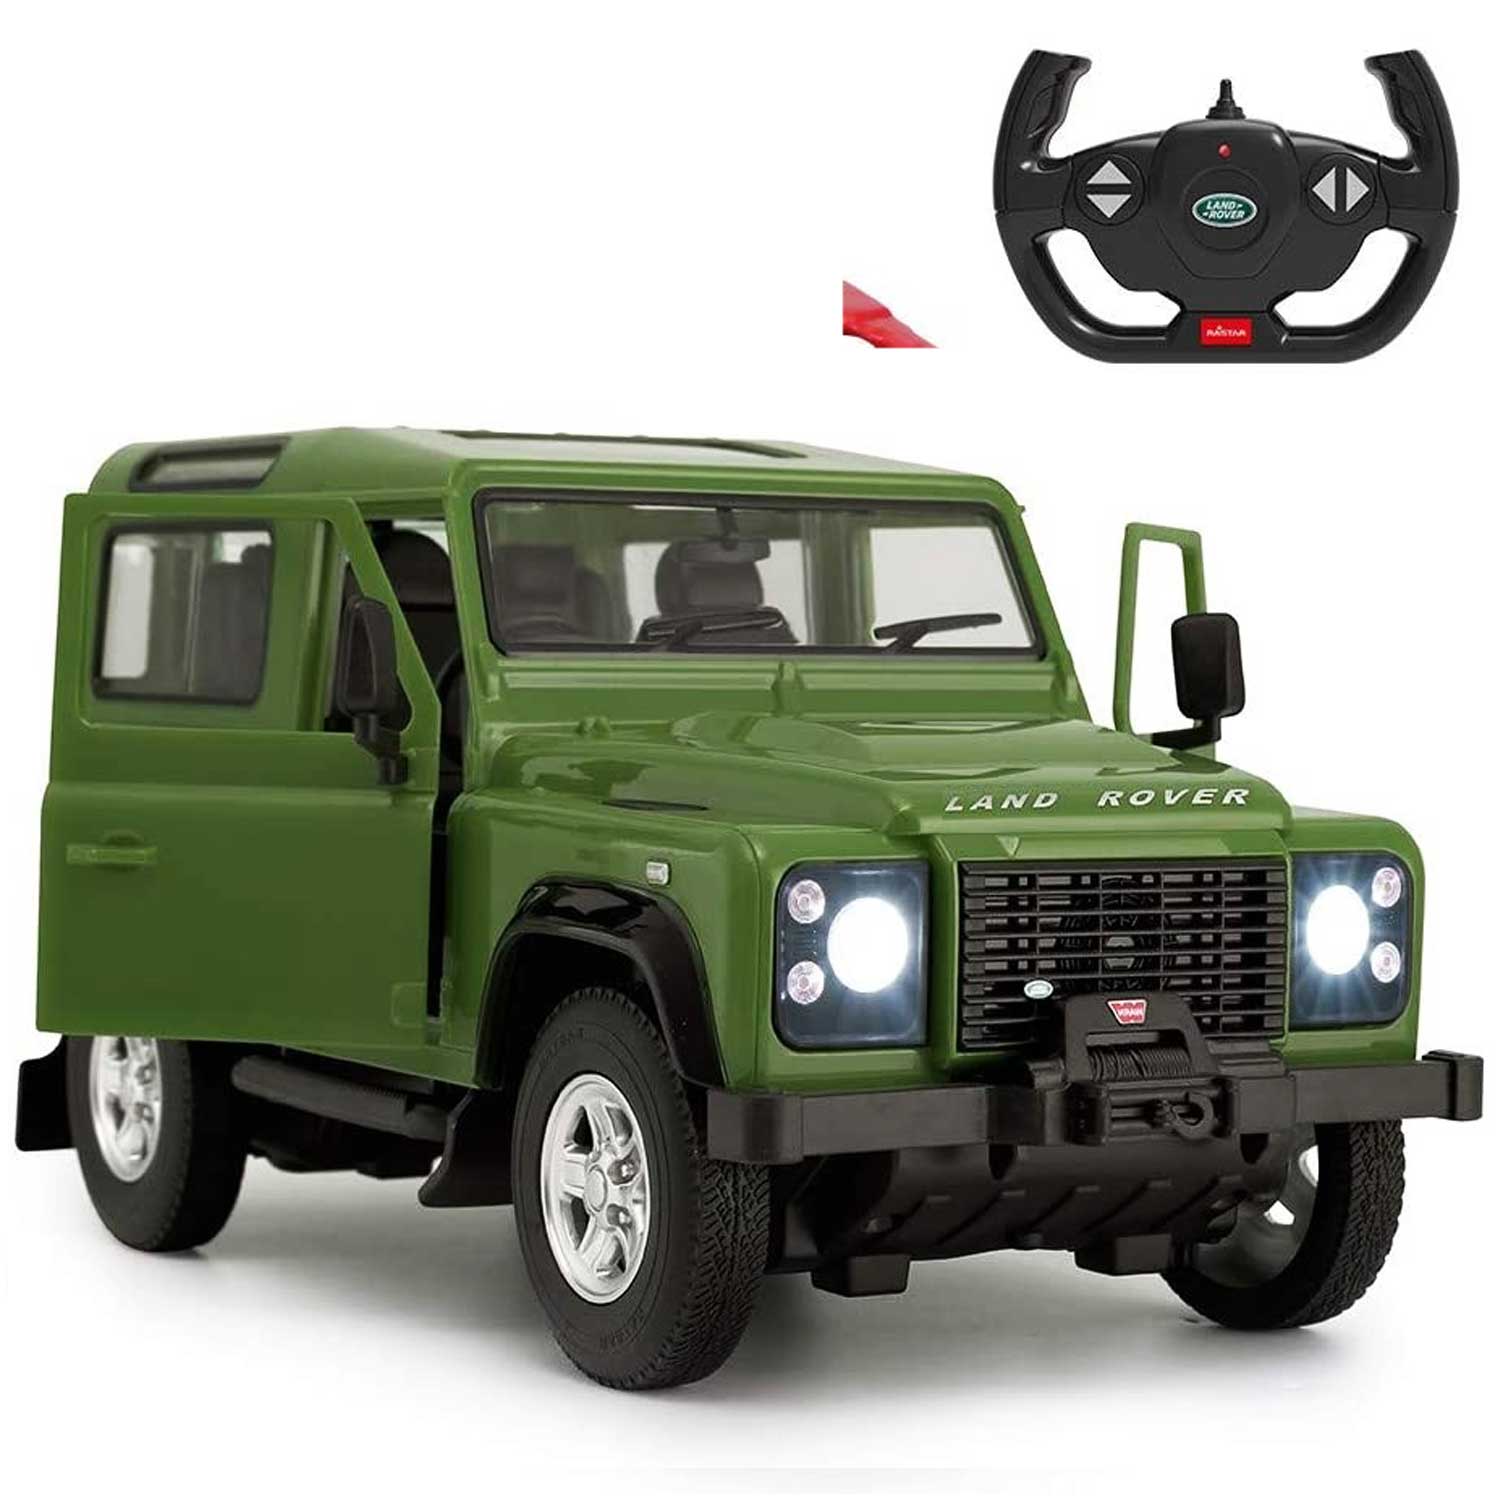 LRDFR14G114-Scale-RC-Land-Rover-Defender-Toy-Car.jpg